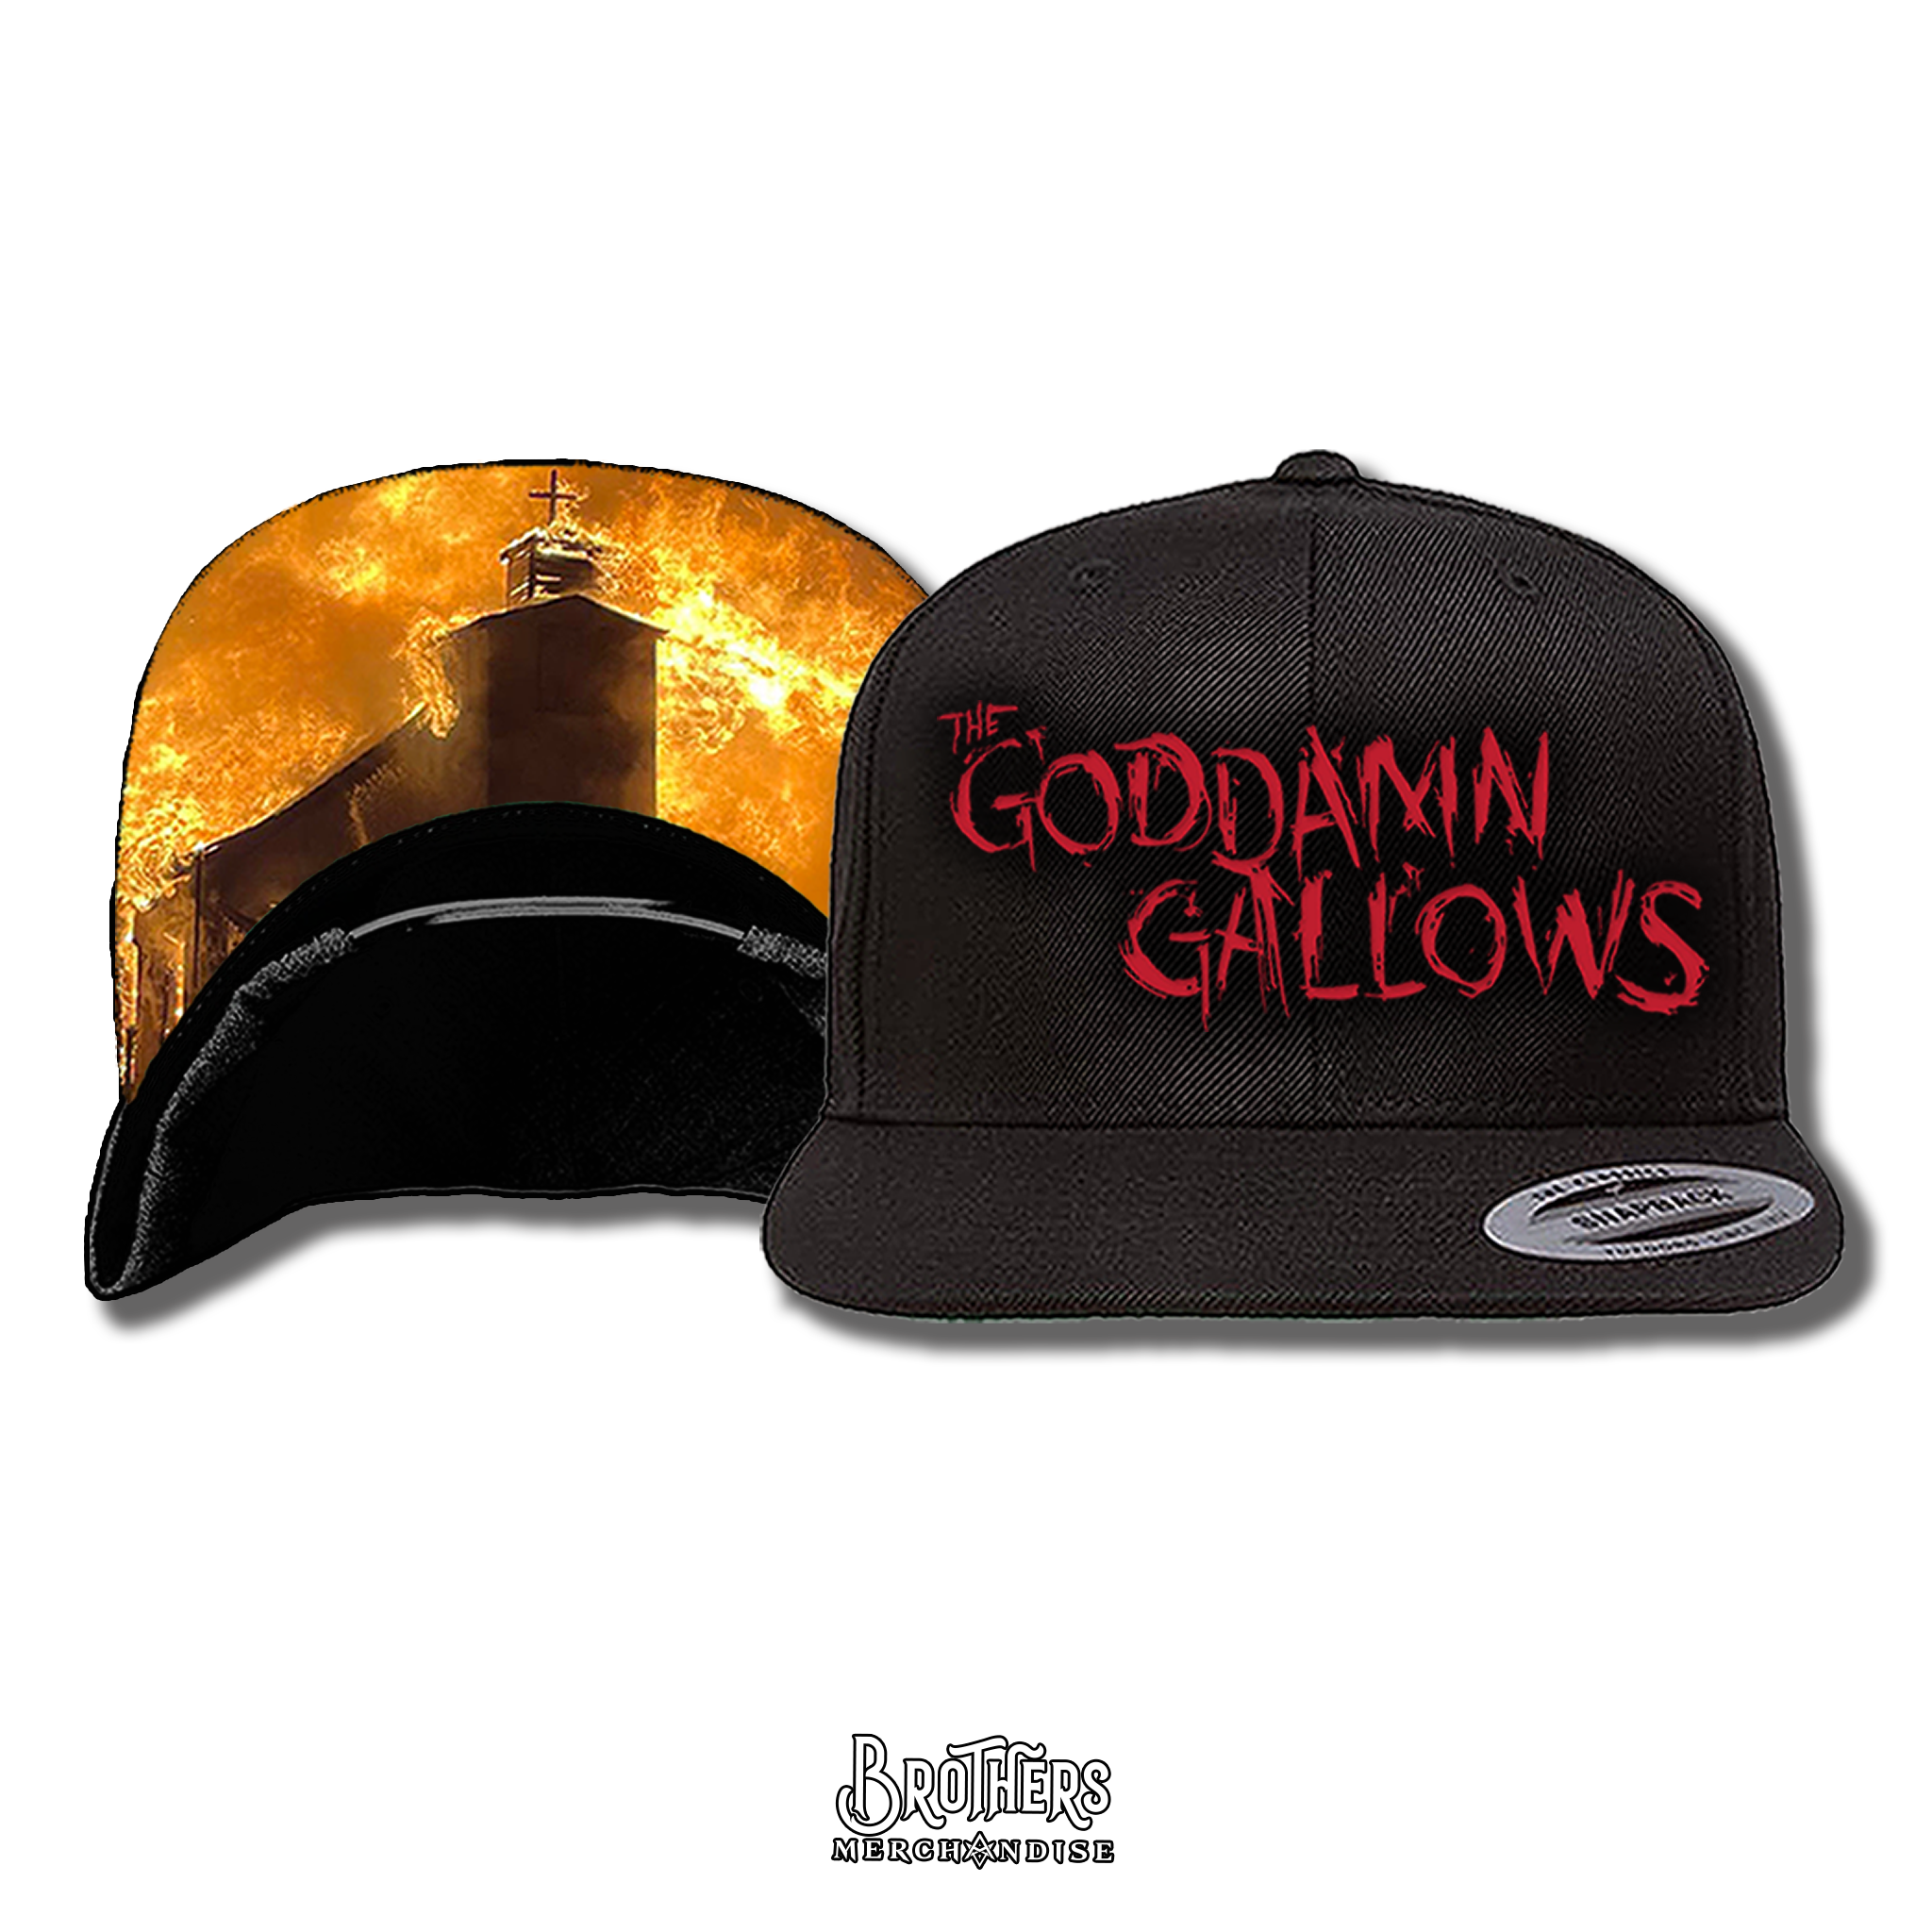 Goddamn Gallows "Burn" Snapback Hat is